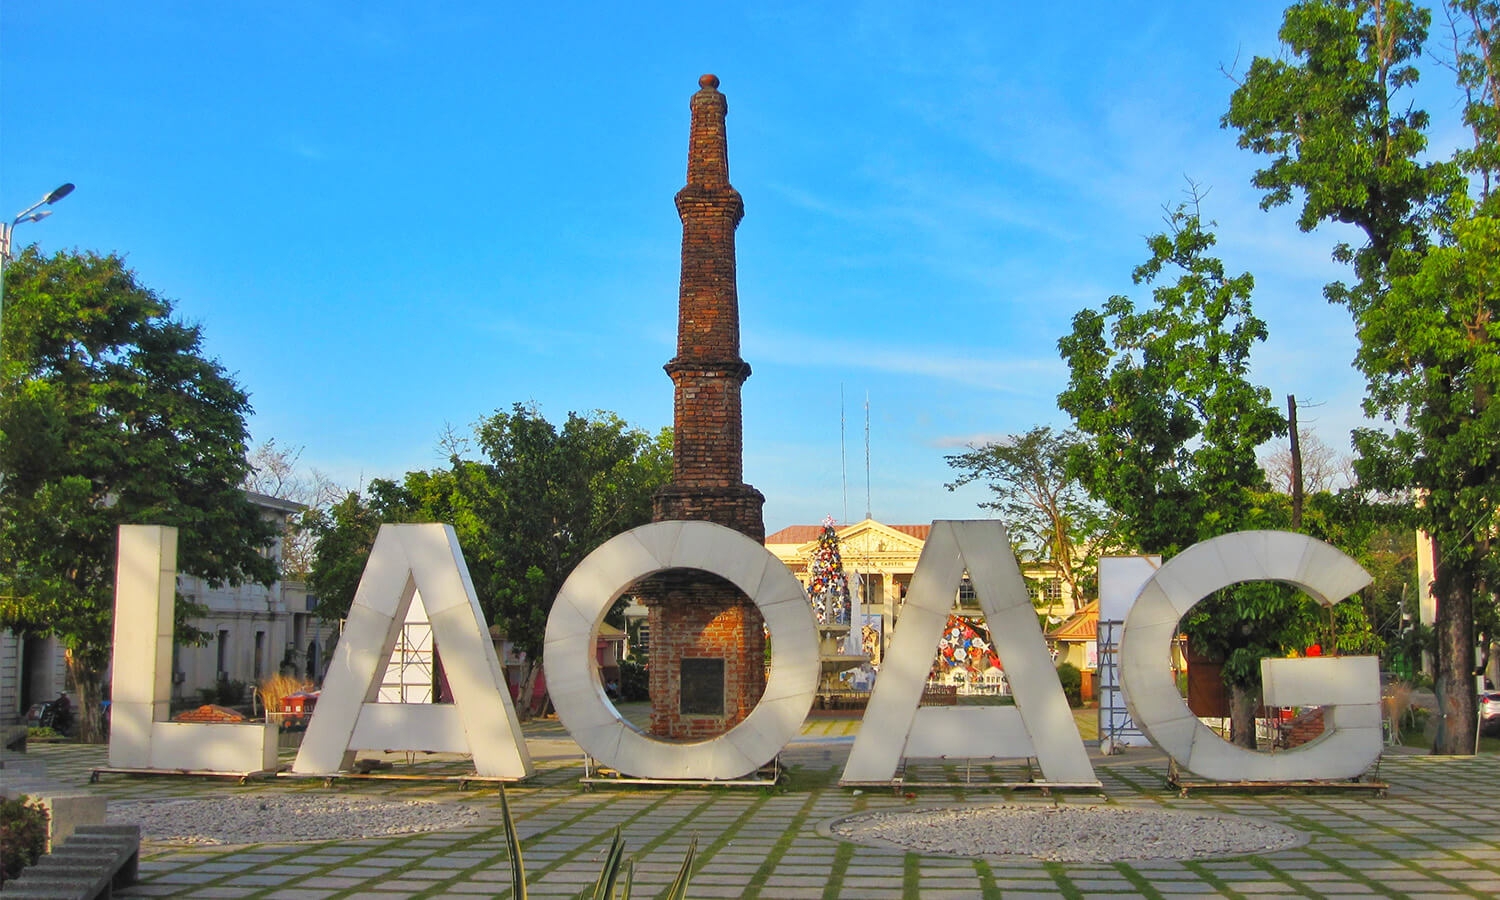 Laoag City Sign